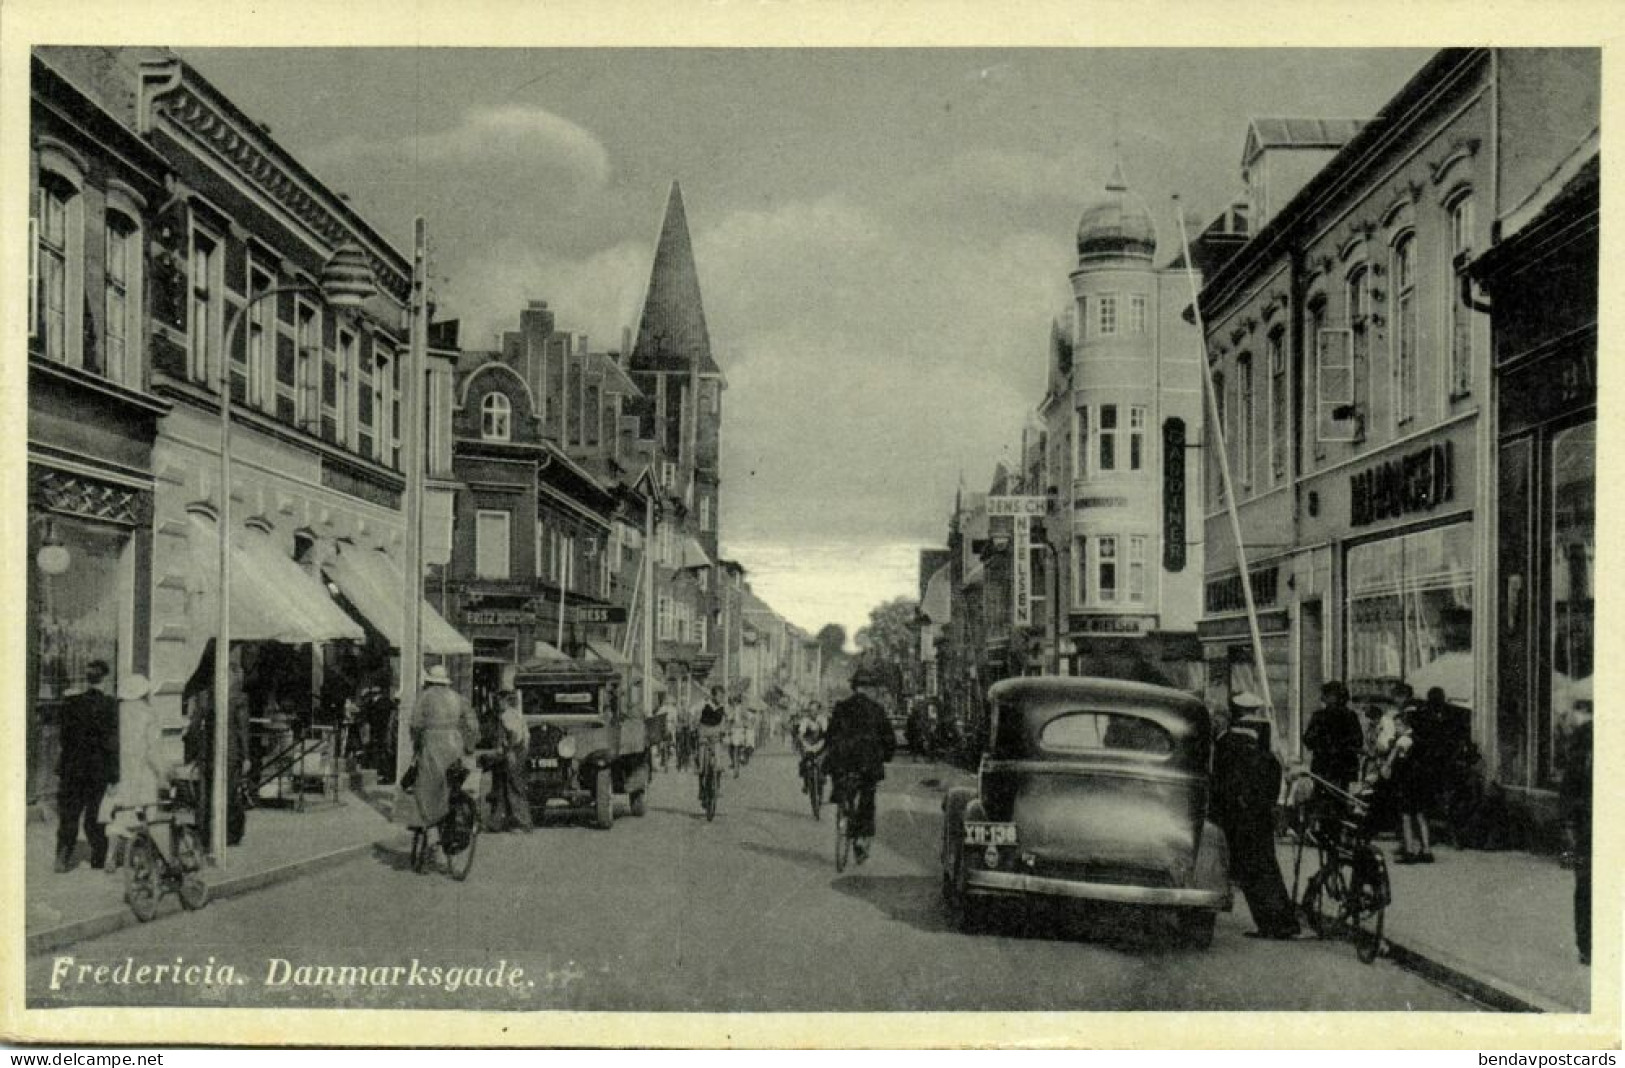 Denmark, FREDERICIA, Jutland, Danmarksgade, Shops, Cars (1930s) Postcard - Denmark